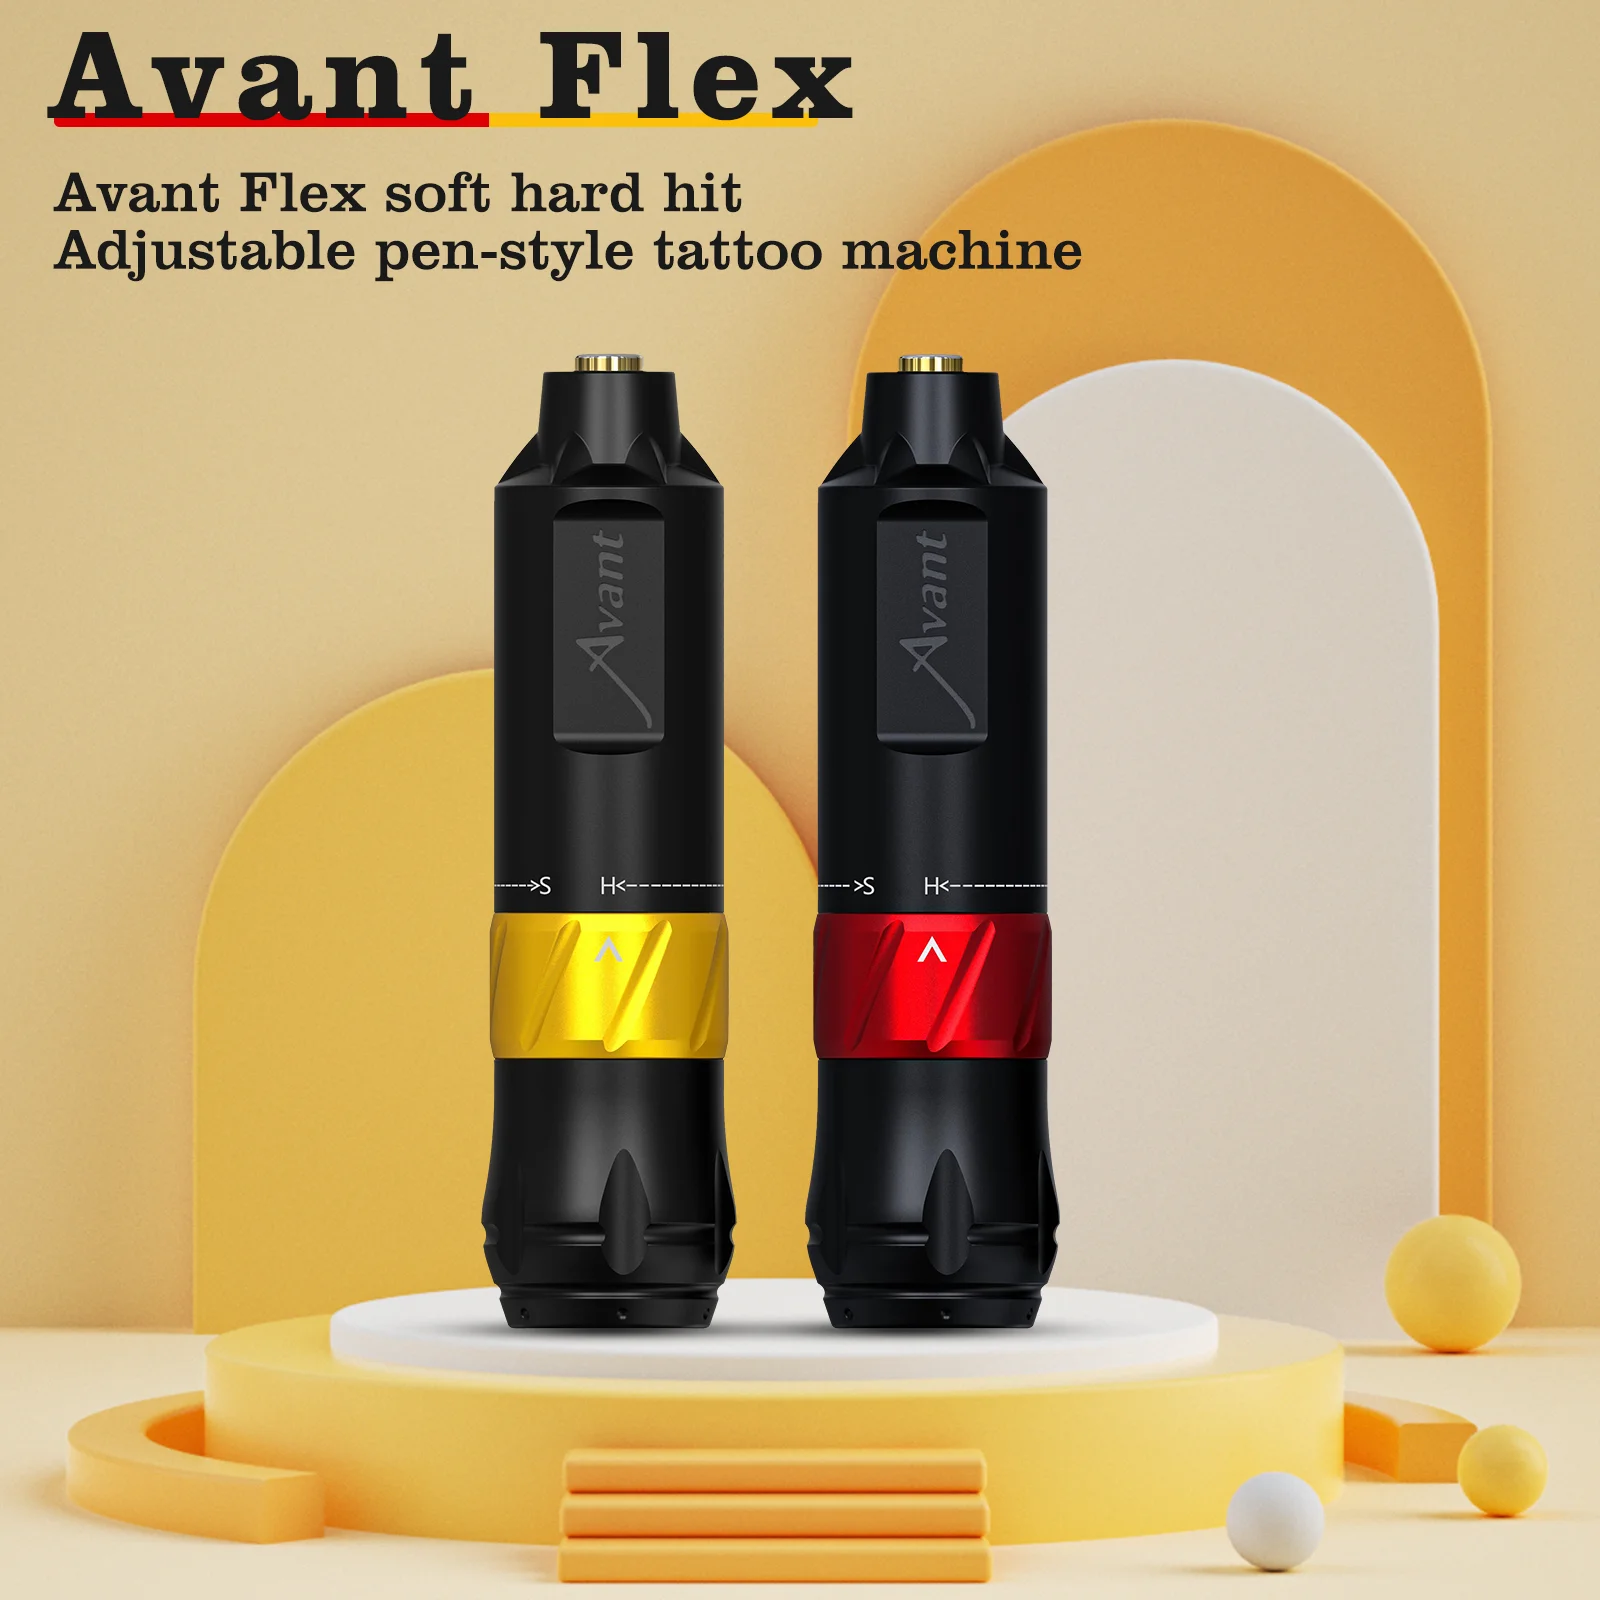 EZ Avant Flex Adjustable Pen-style Tattoo Machine Pen for Cartridge Tattoo Needles Allow Hit Strength From Soft to Hard